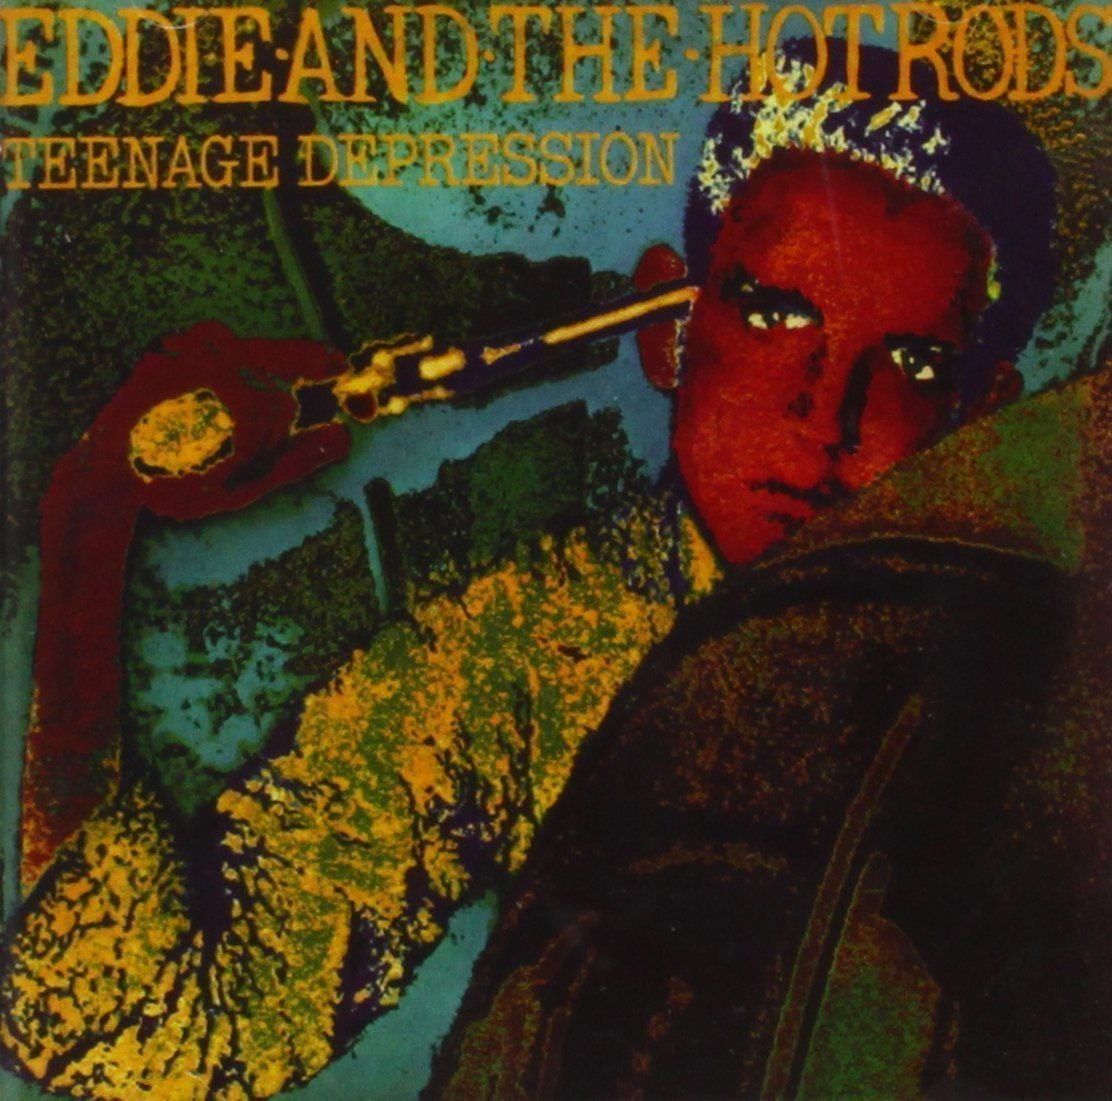 LP Eddie And The Hot Rods - Teenage Depression (LP)